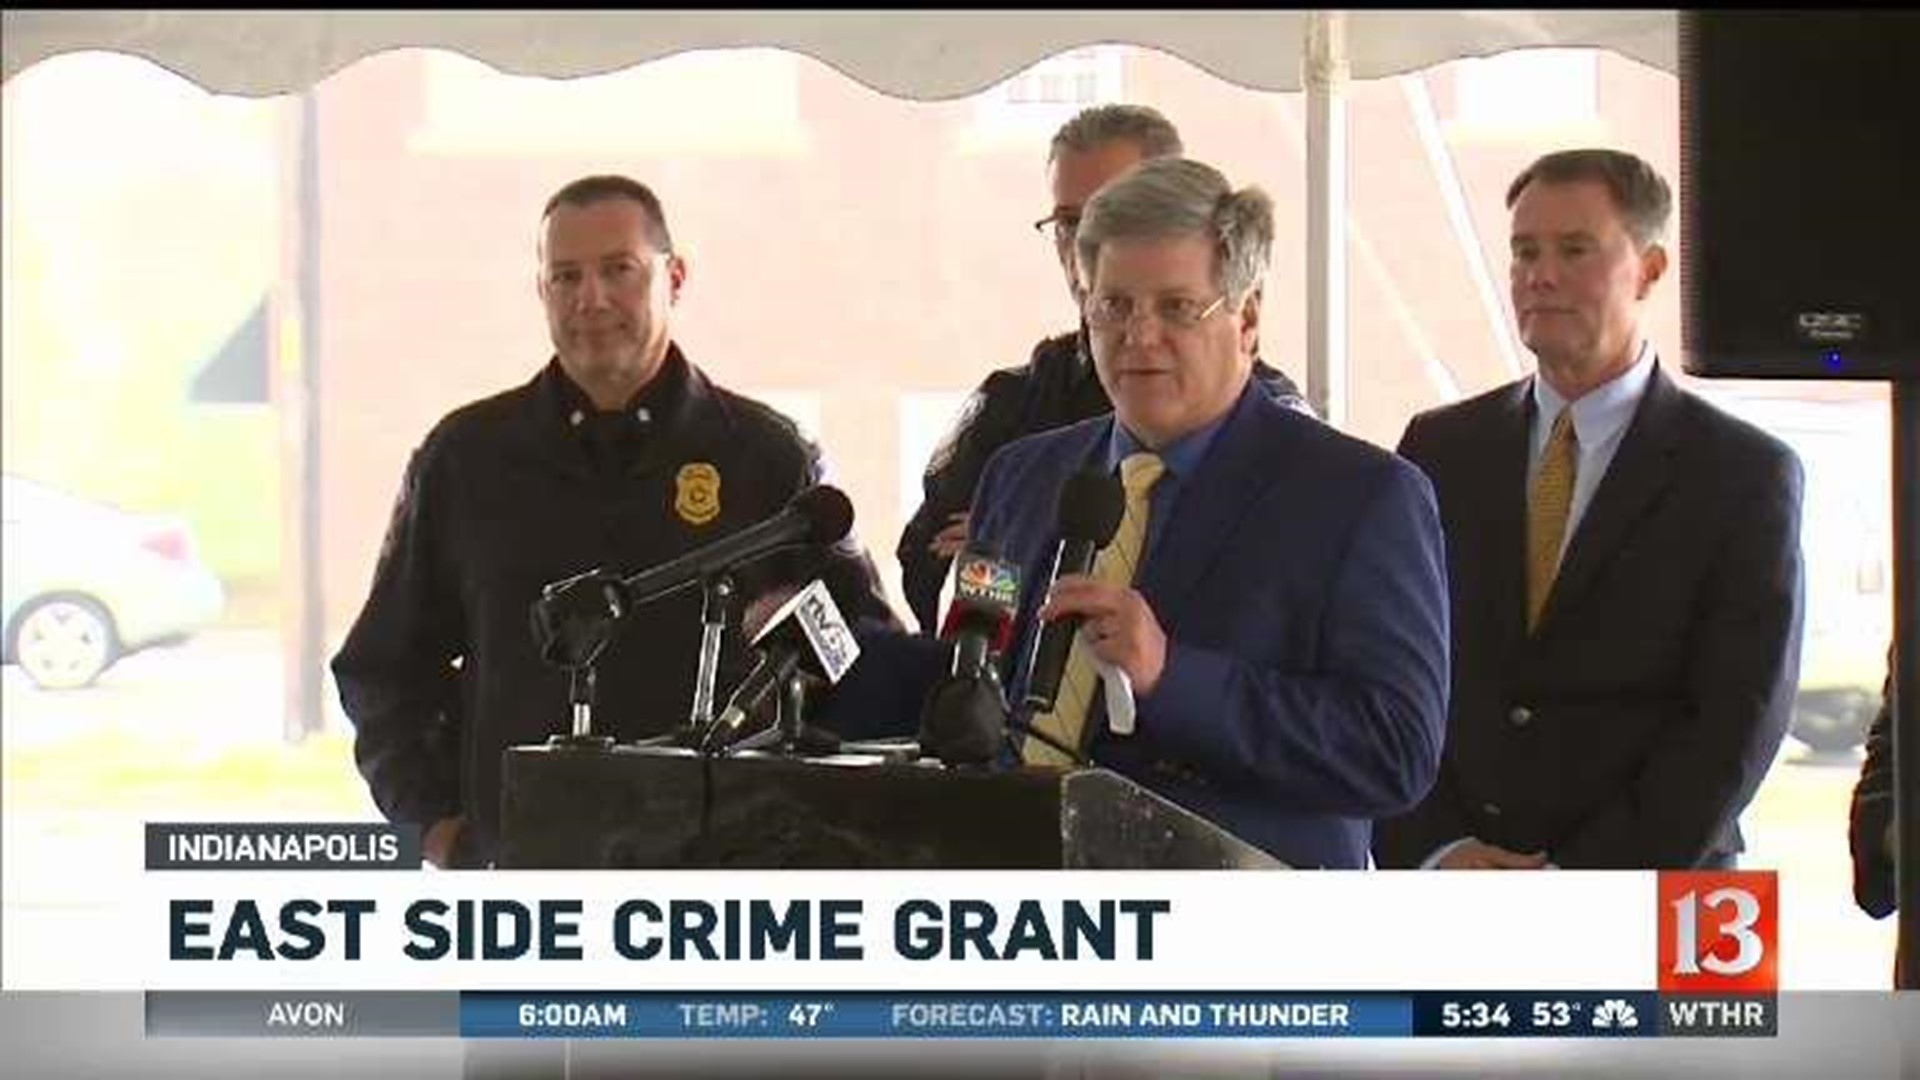 East side crime grant